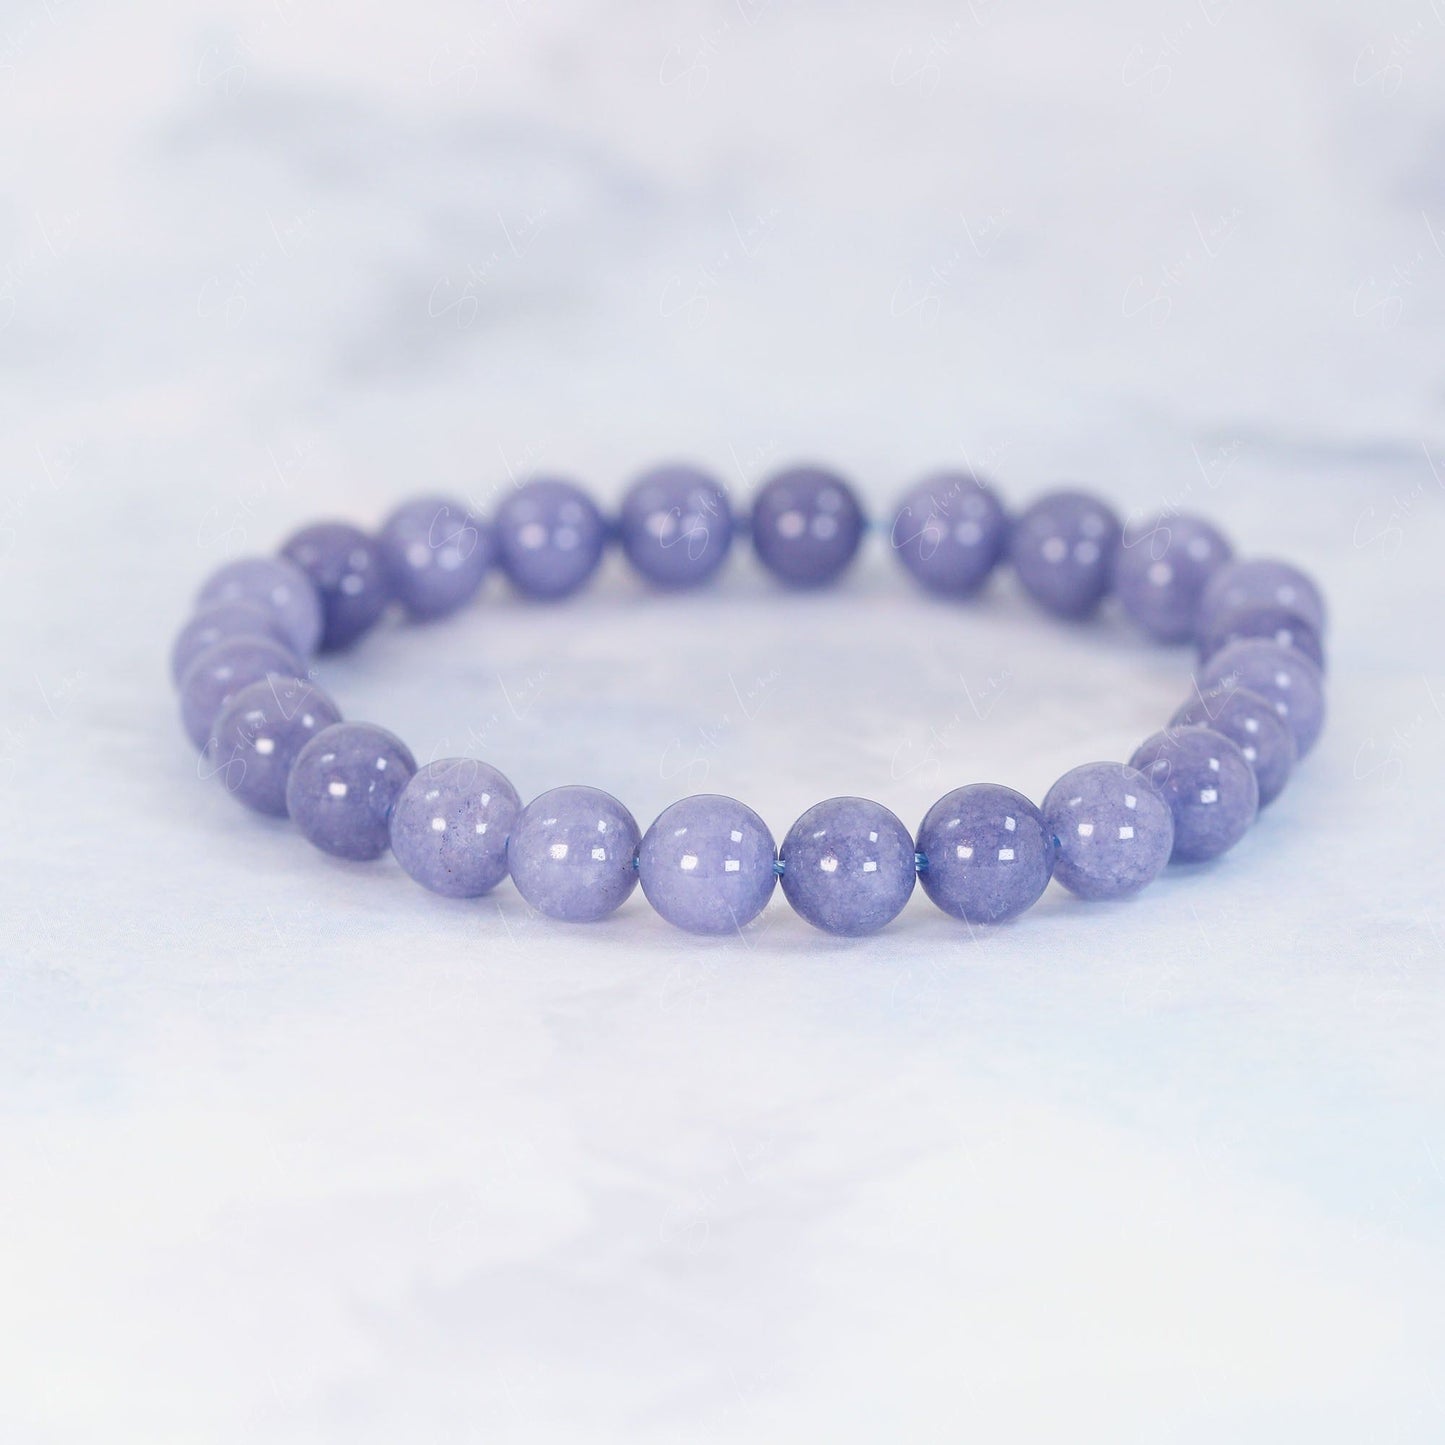 Blue Angelite beaded bracelet with Cherish cat bead charm